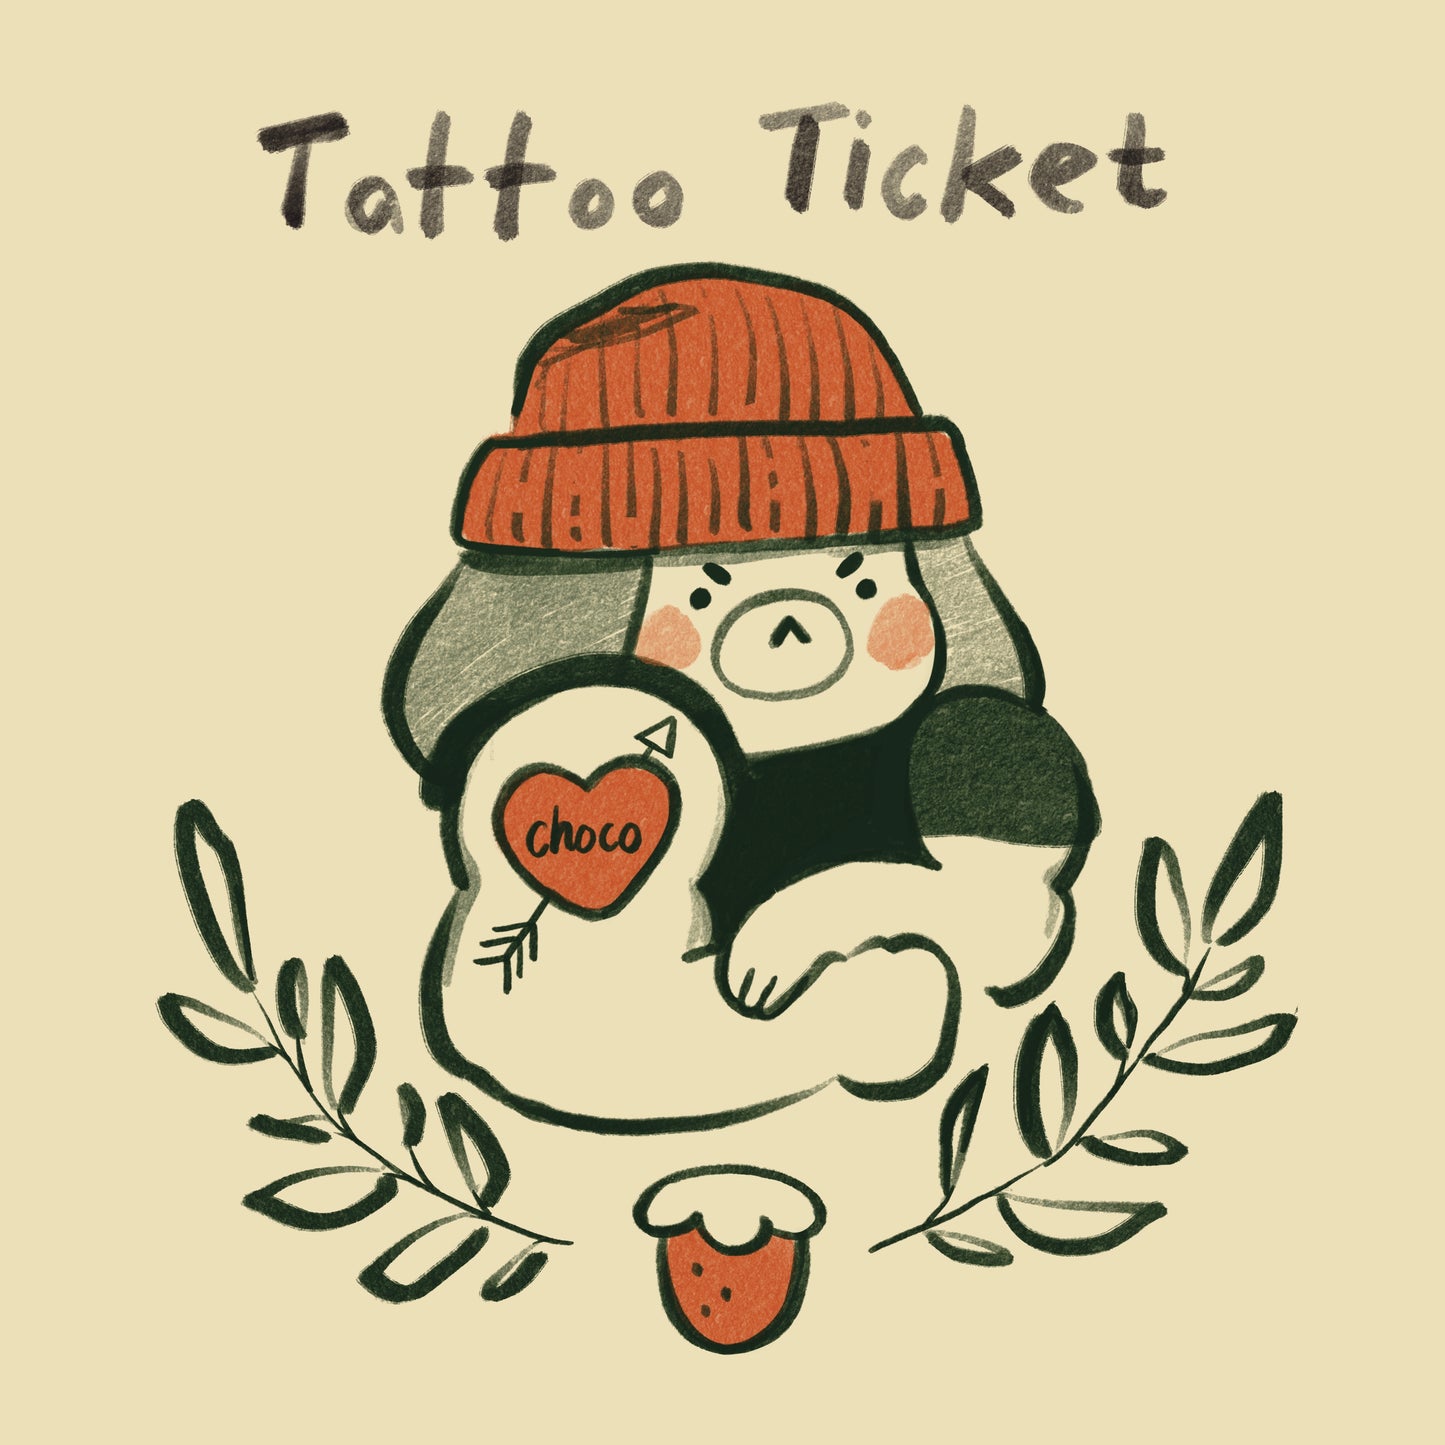 Tattoo Ticket (Please read Description)